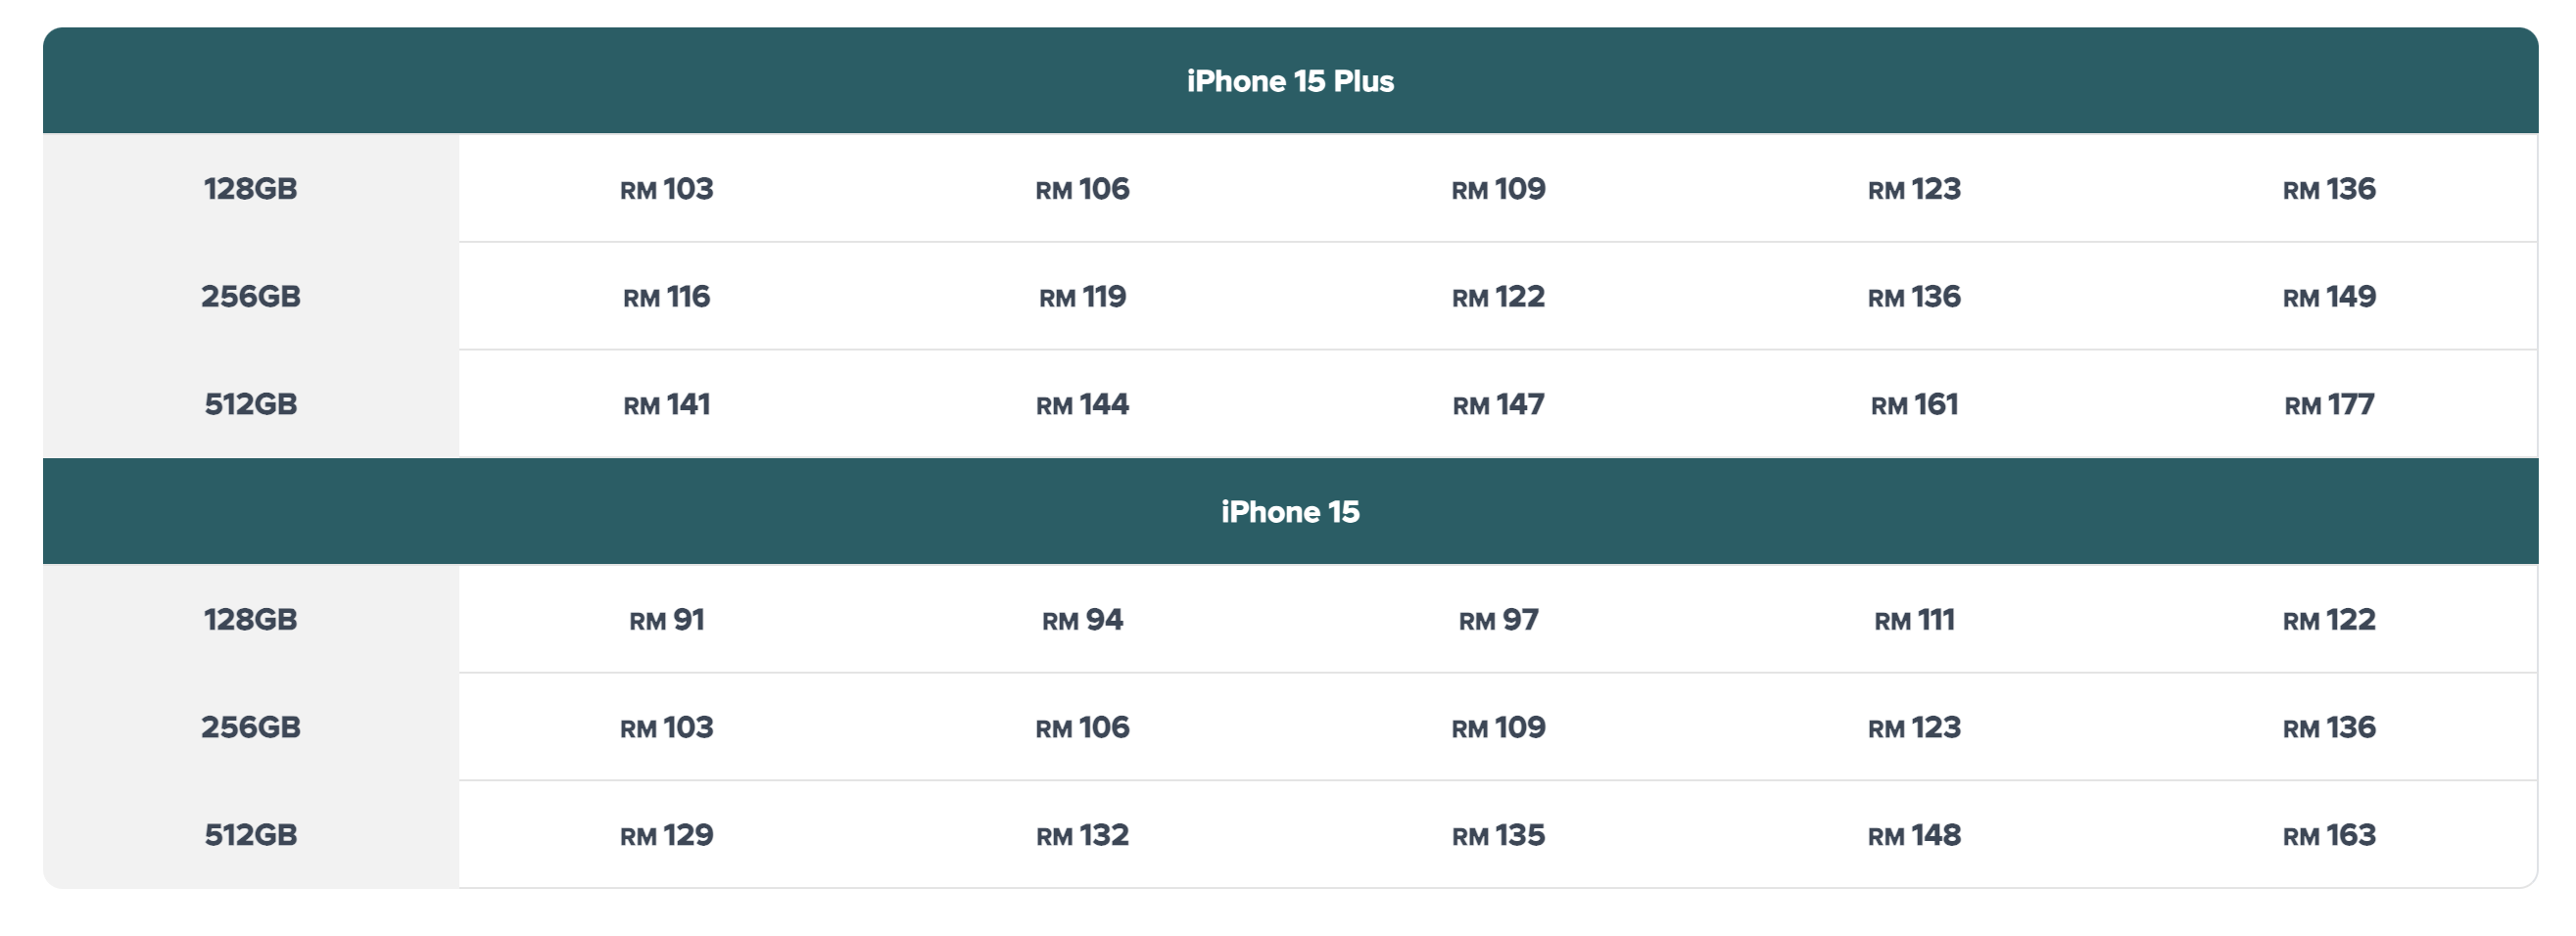 Maxis iPhone 15 & iPhone 15 Plus Pricing